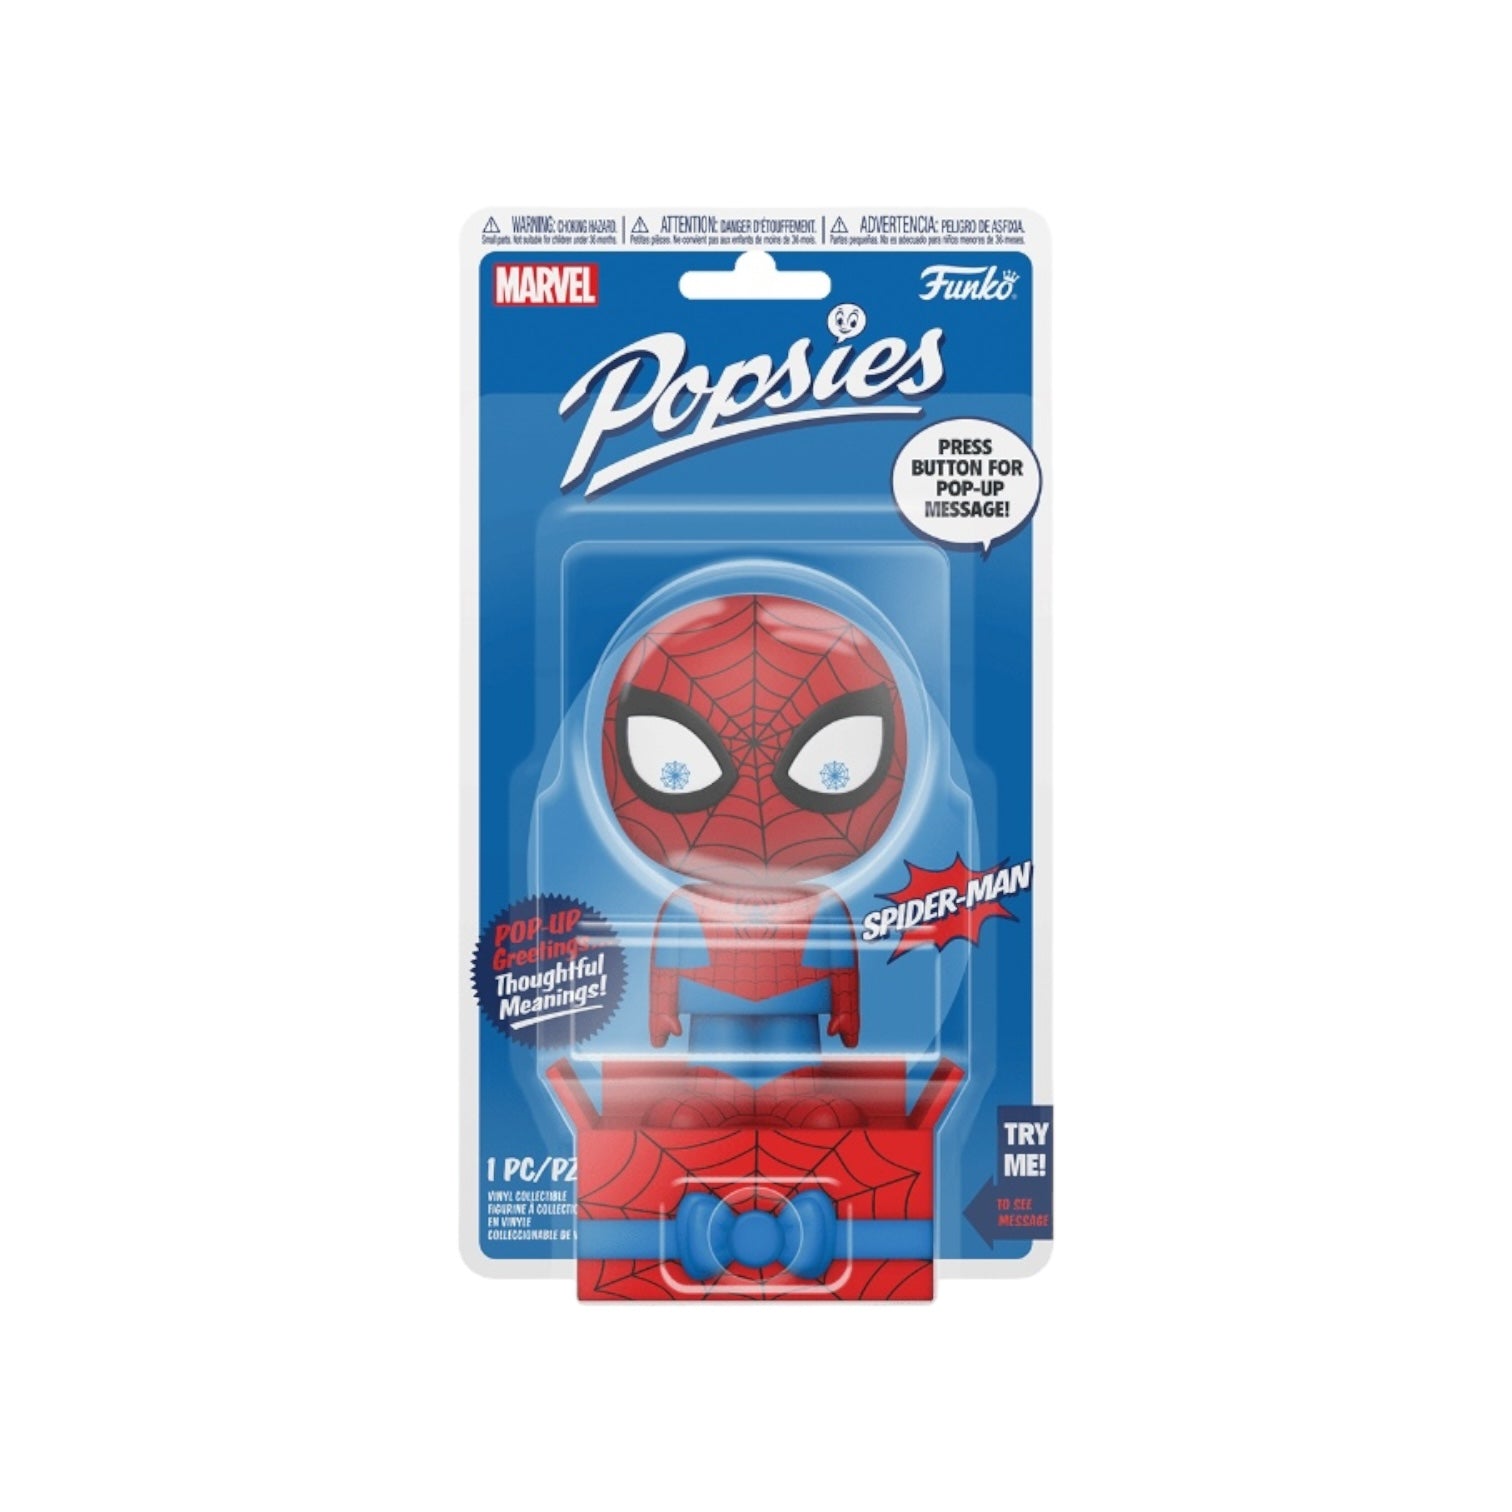 Spider-Man - Funko Popsies  - Marvel